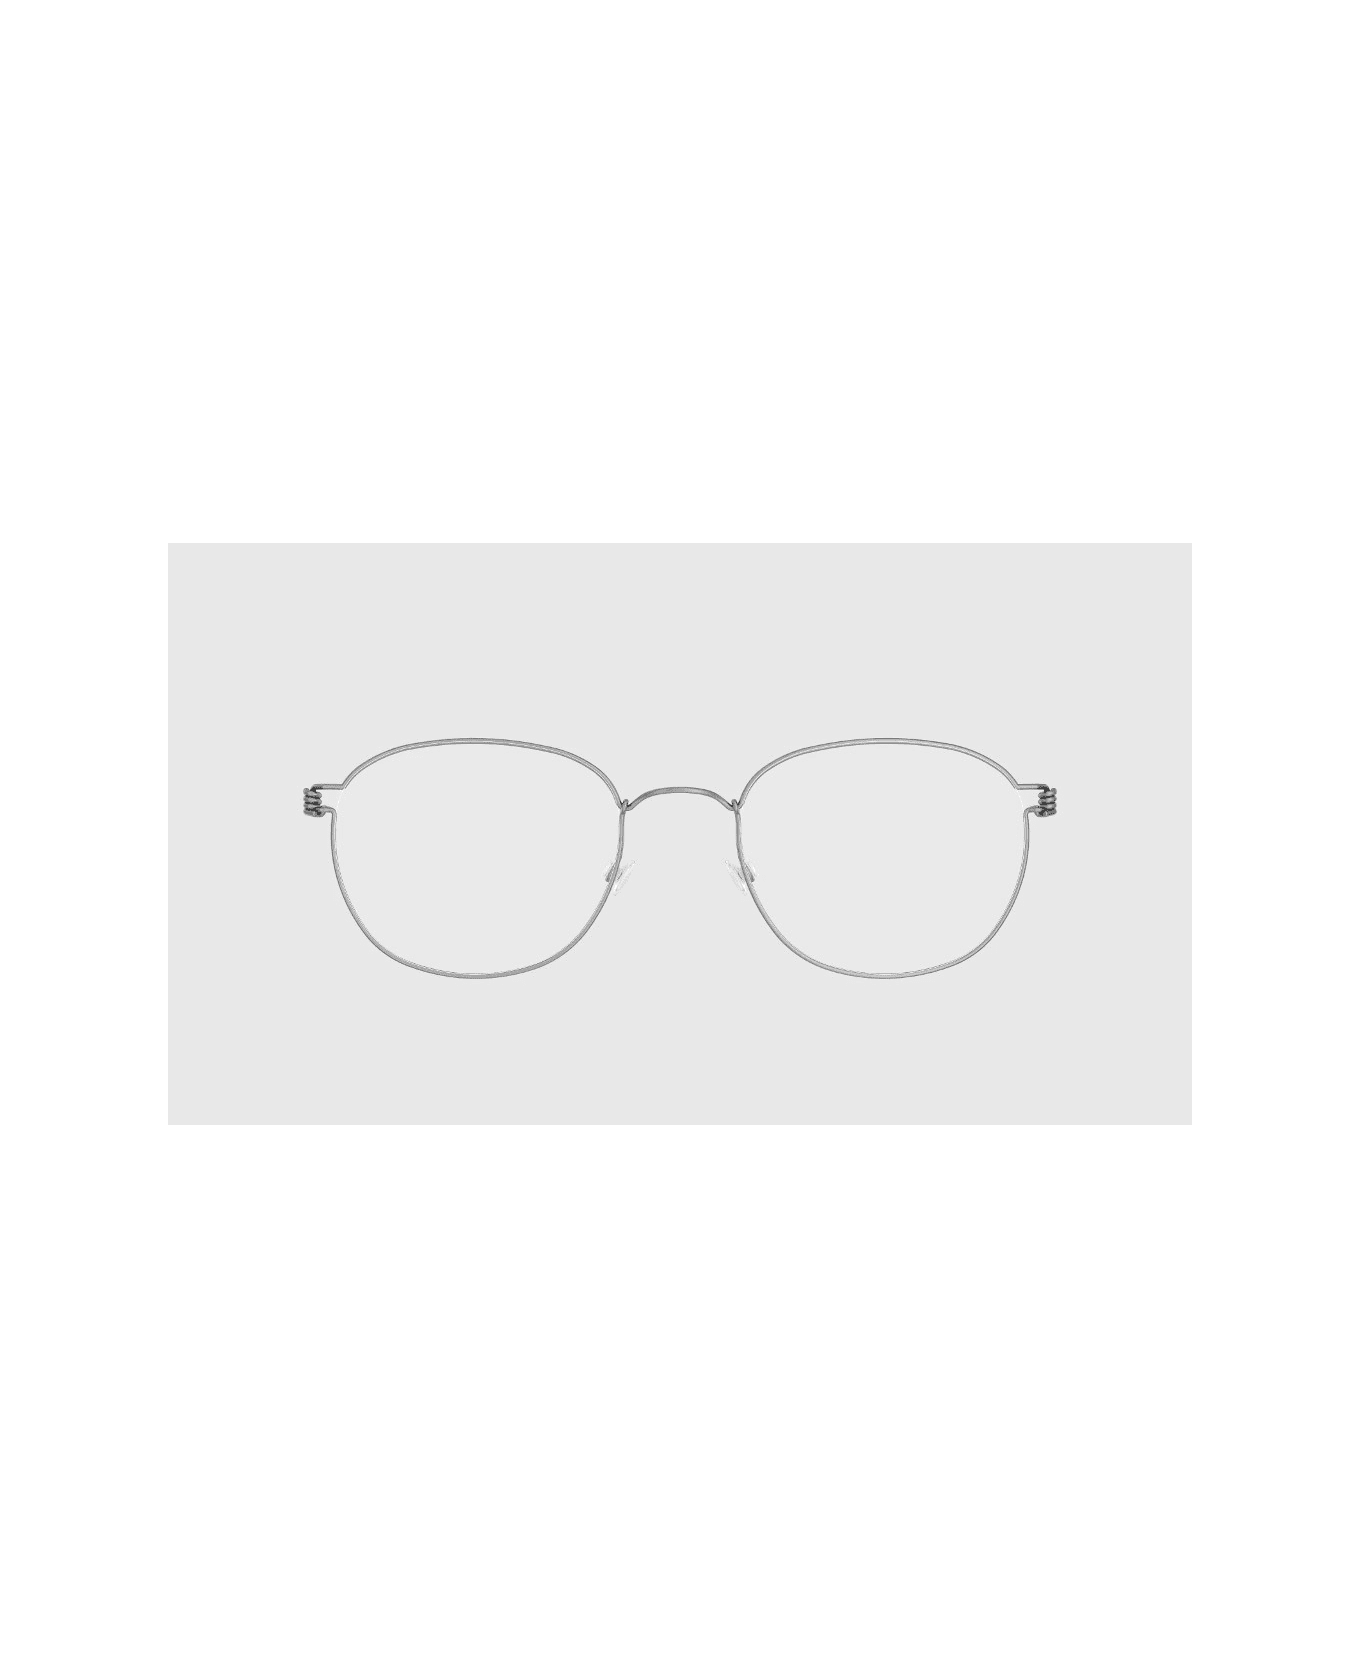 LINDBERG Robin 10 Glasses - Silver